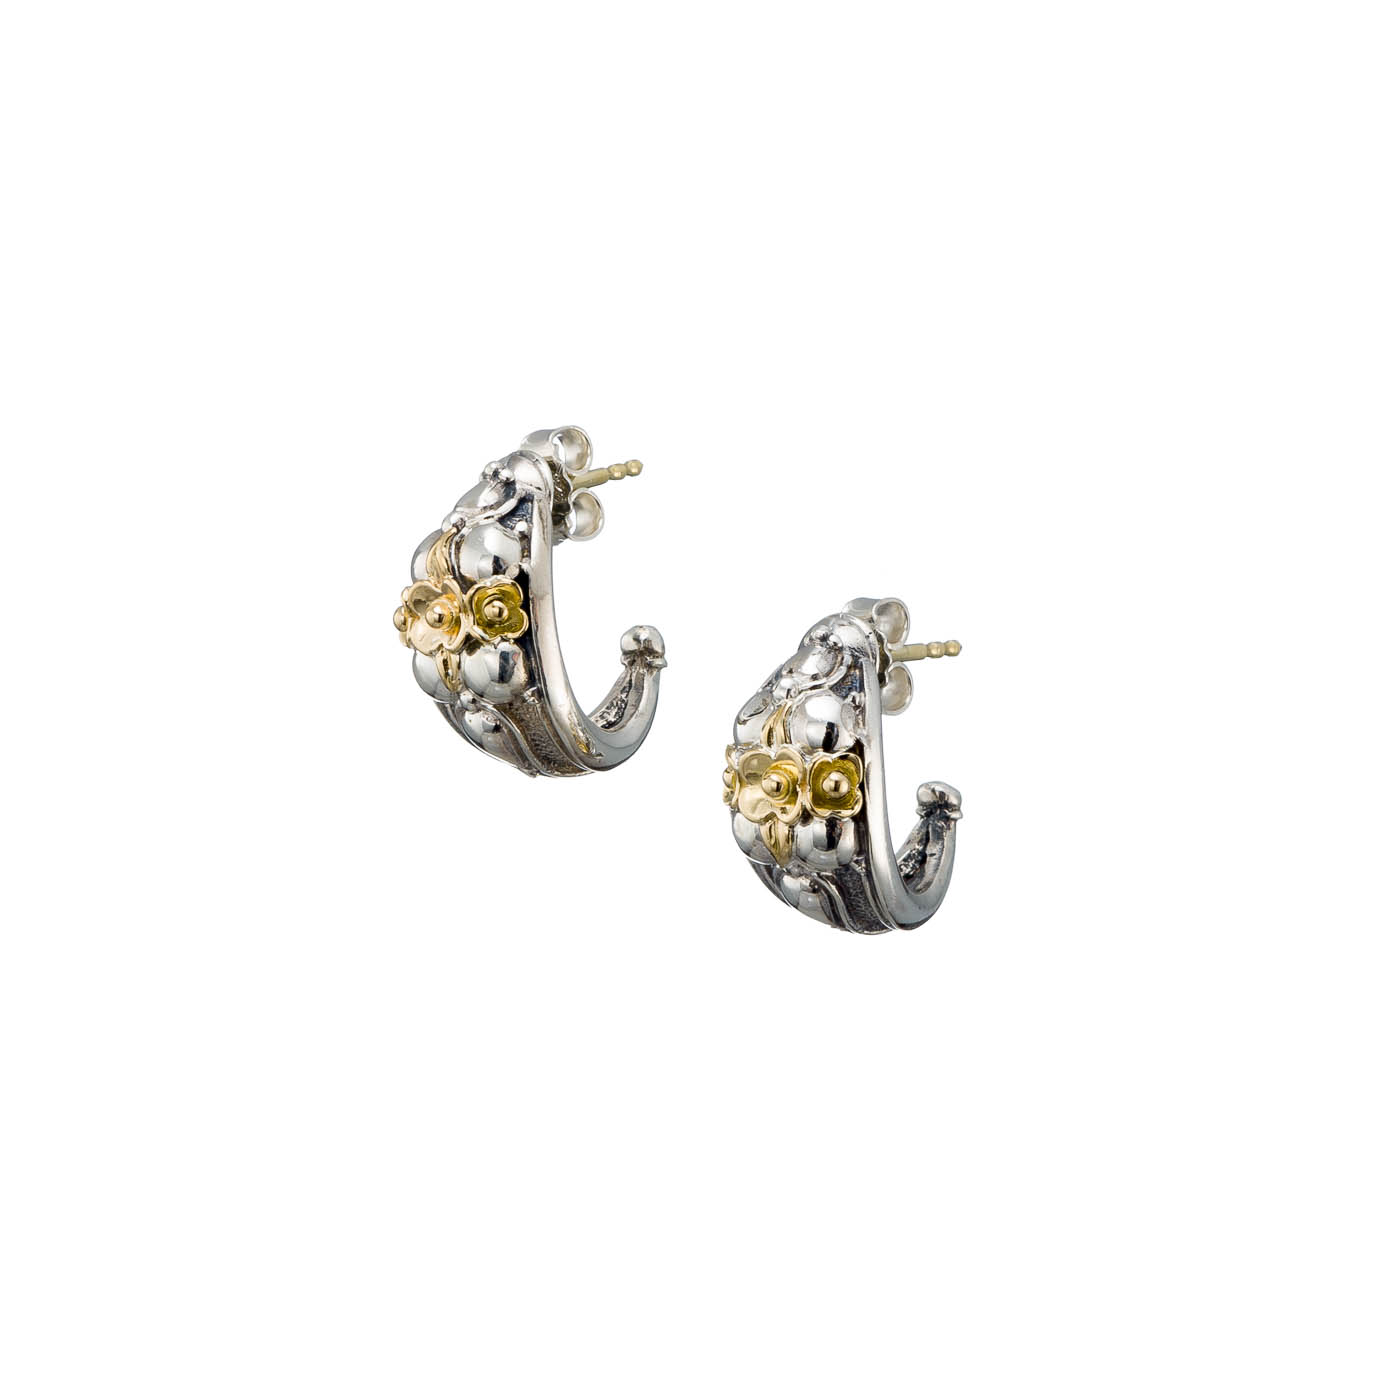 Kassandra half hoops Earrings in 18K Gold and Sterling Silver